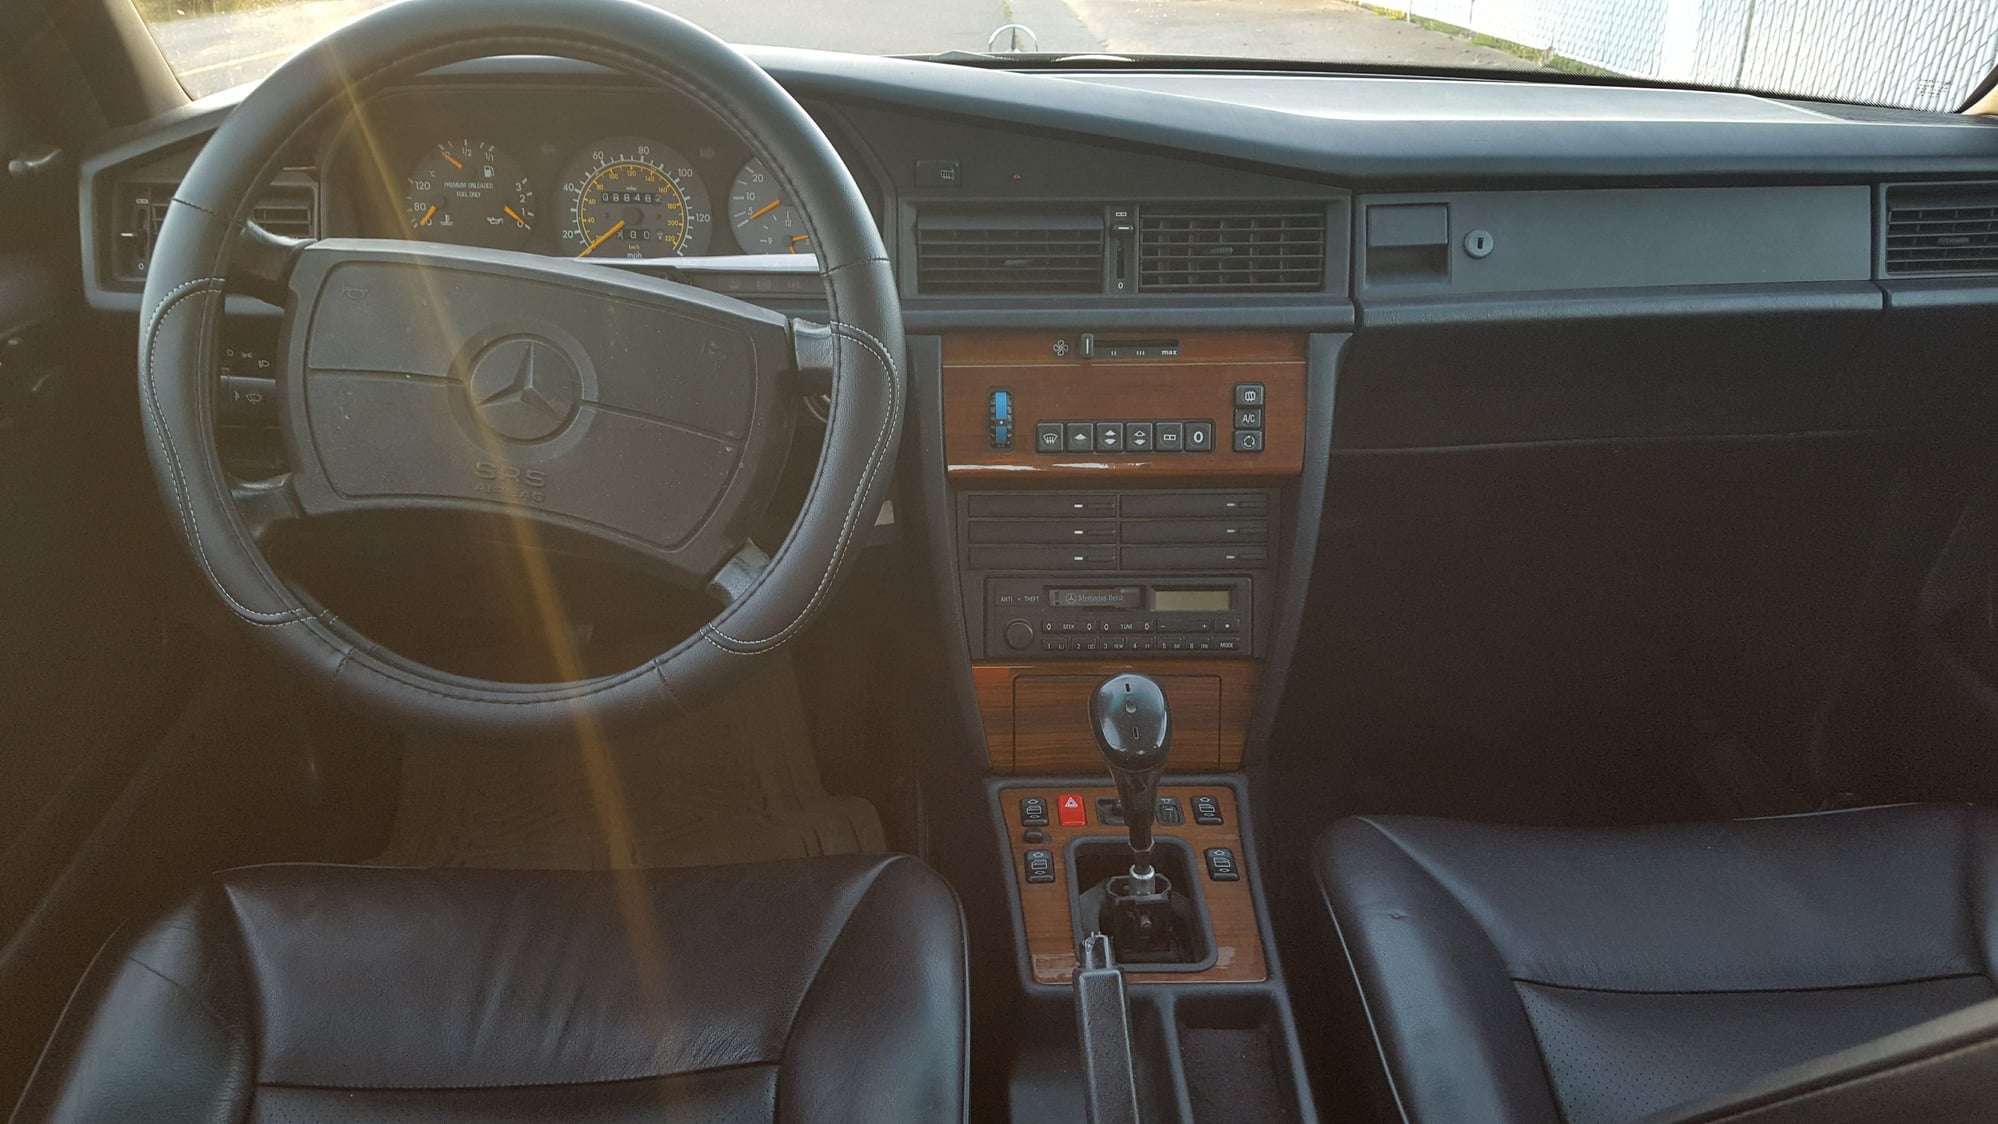 2010 Mercedes-Benz SLK350 - 1991 190e 2.6 manual transmission and a super clean interior - Sacramento, CA 95673, United States